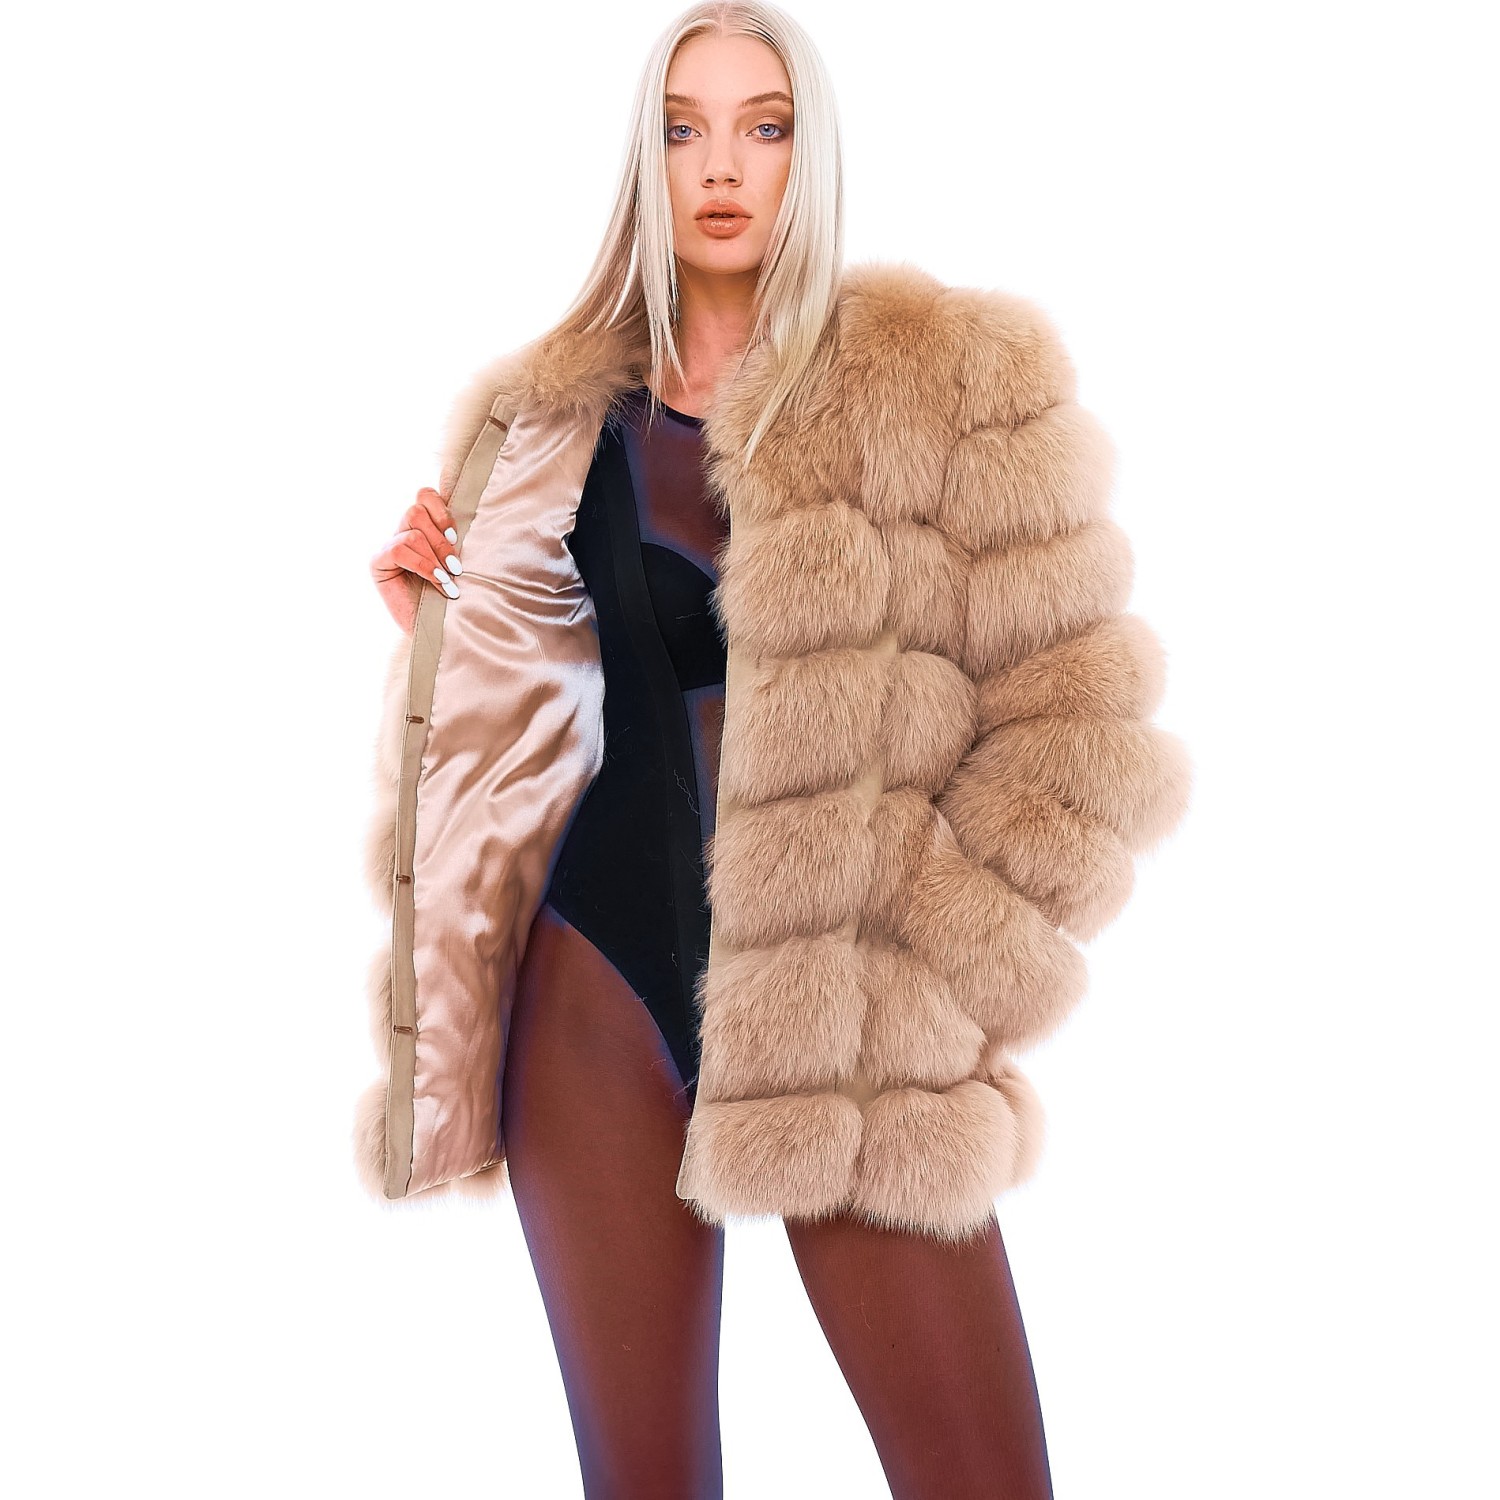 Fox Fur Jacket „Vogue“ in Caramel, Ladiesvest, Girlsjacket, Furjacket